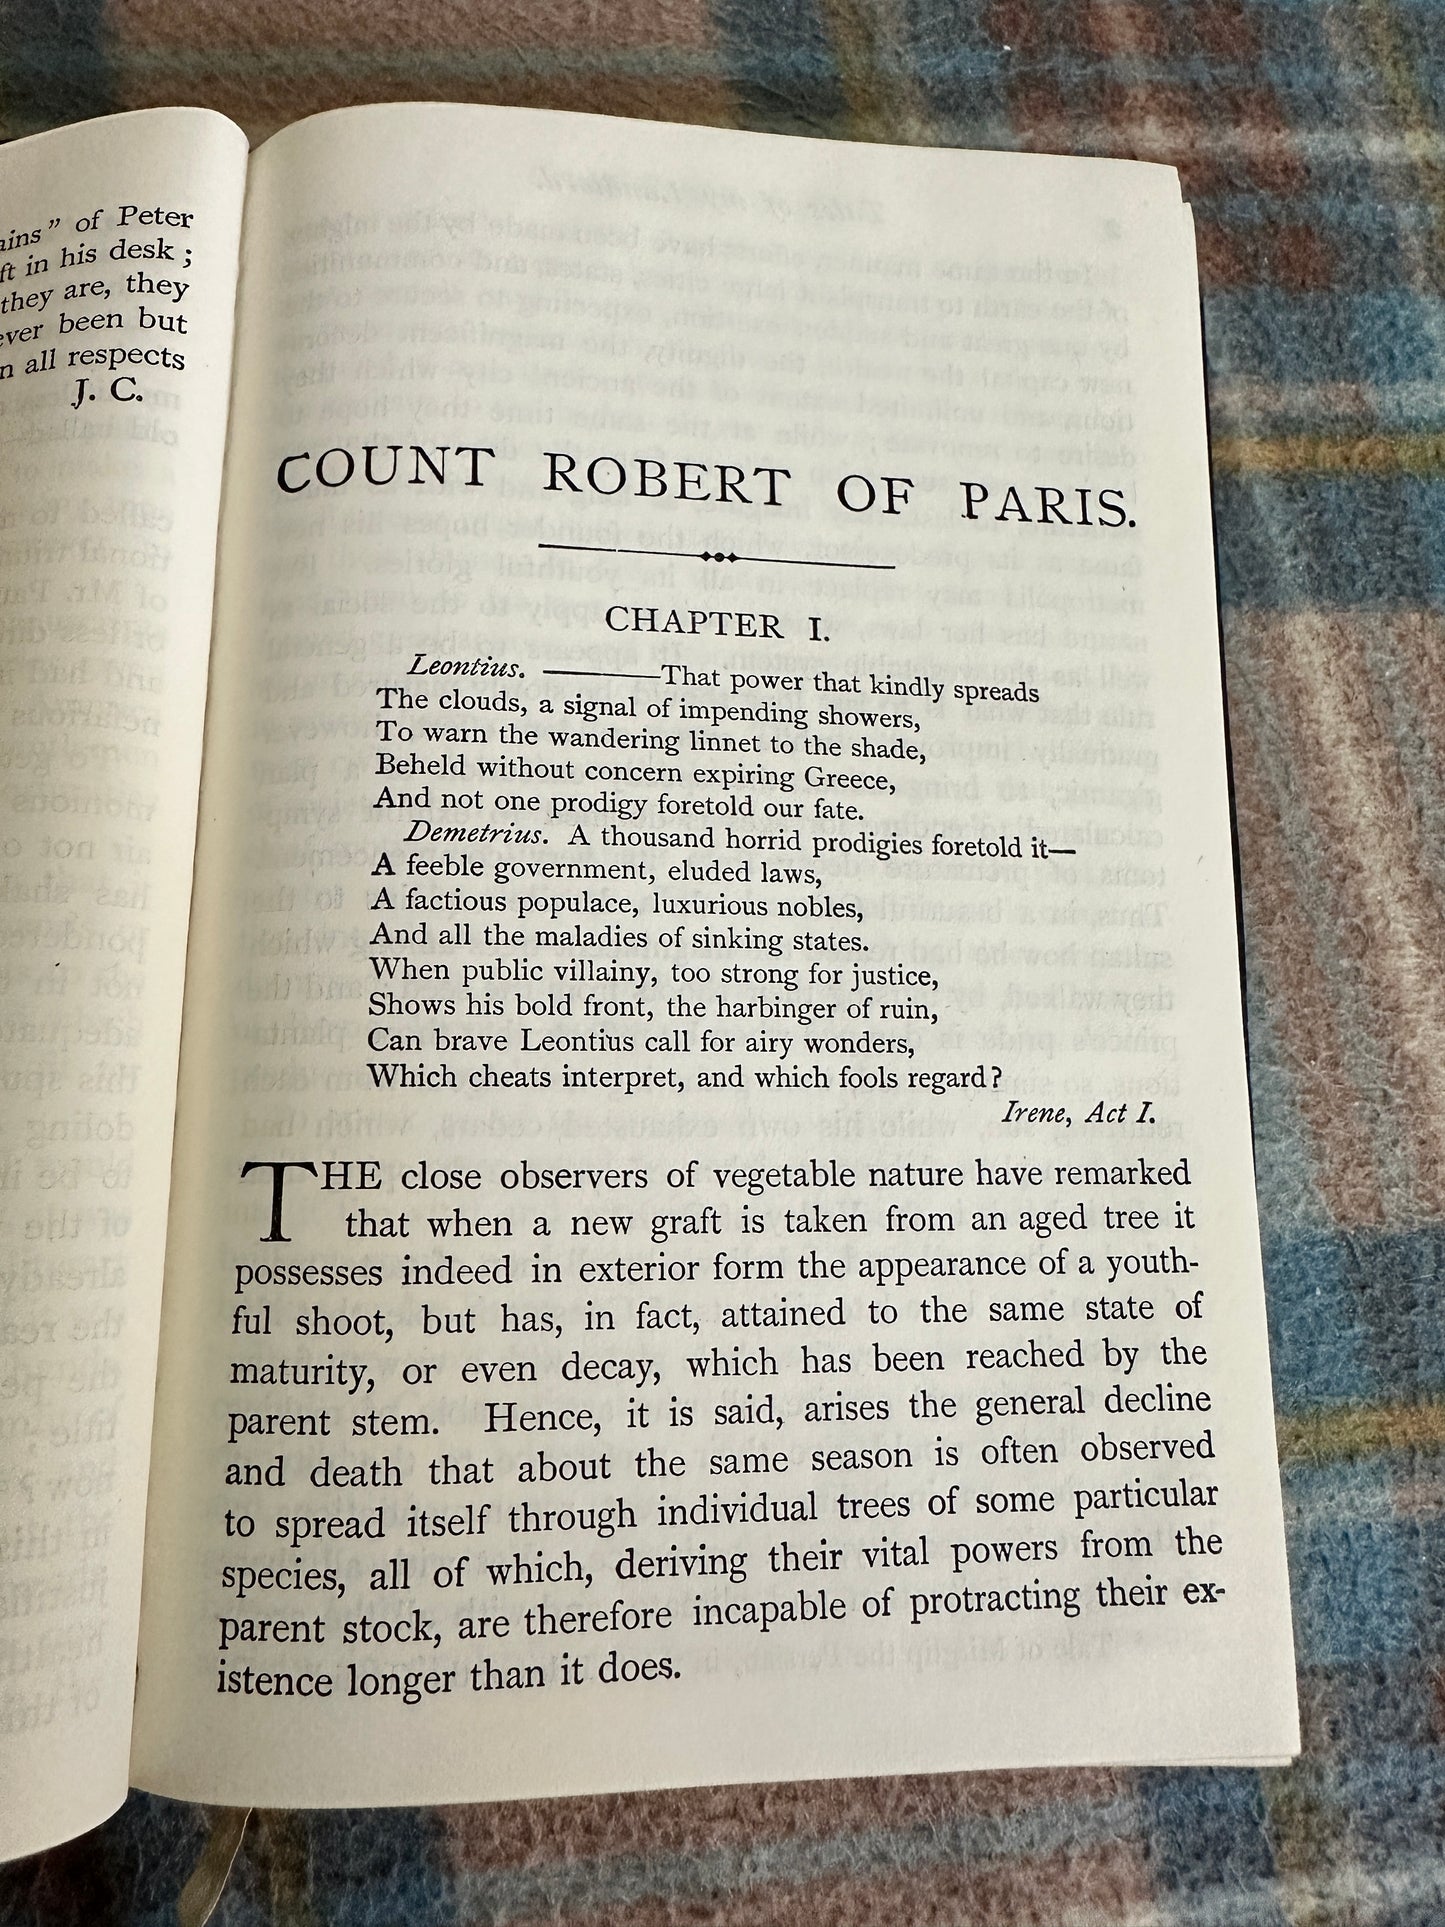 1901 Count Robert Of Paris(New Century Library XXIV) Sir Walter Scott(Thomas Nelson Pub)